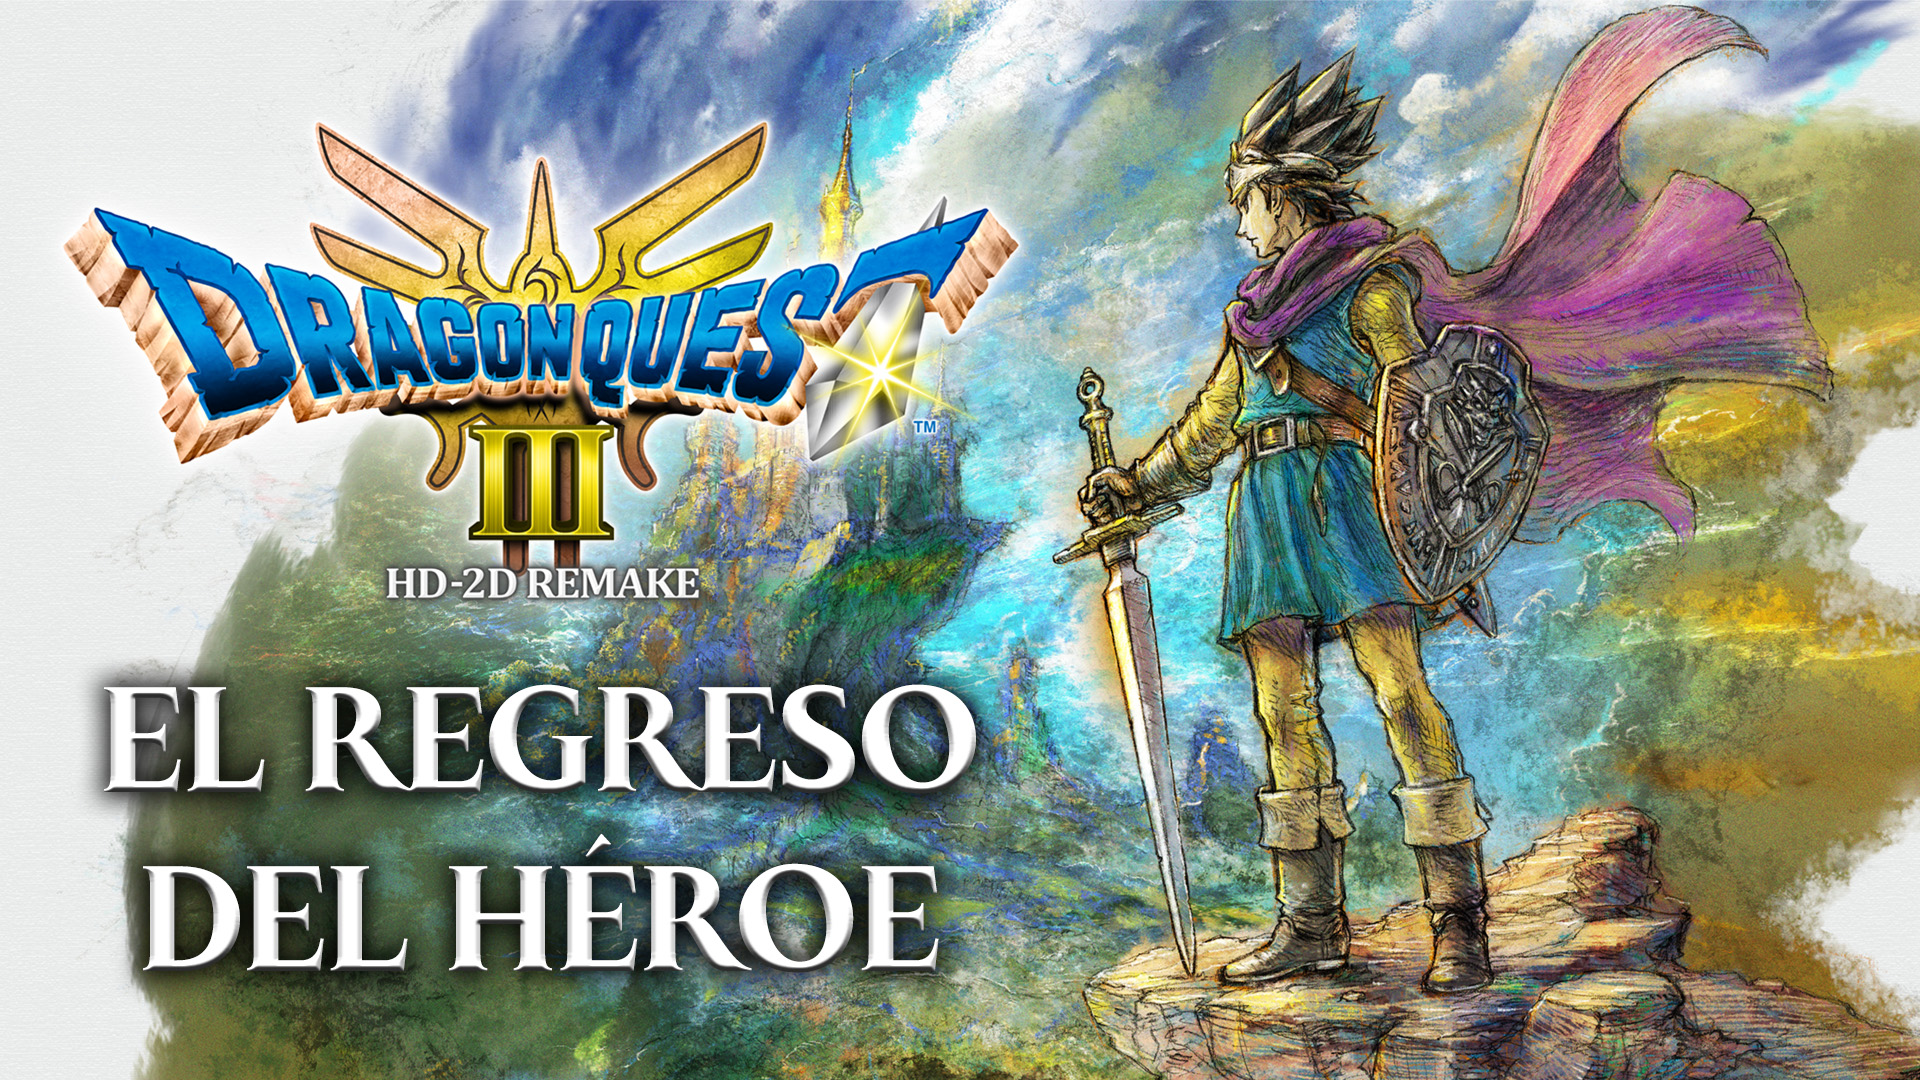 Dragon Quest 3 HD-2D Remake – El regreso del Héroe